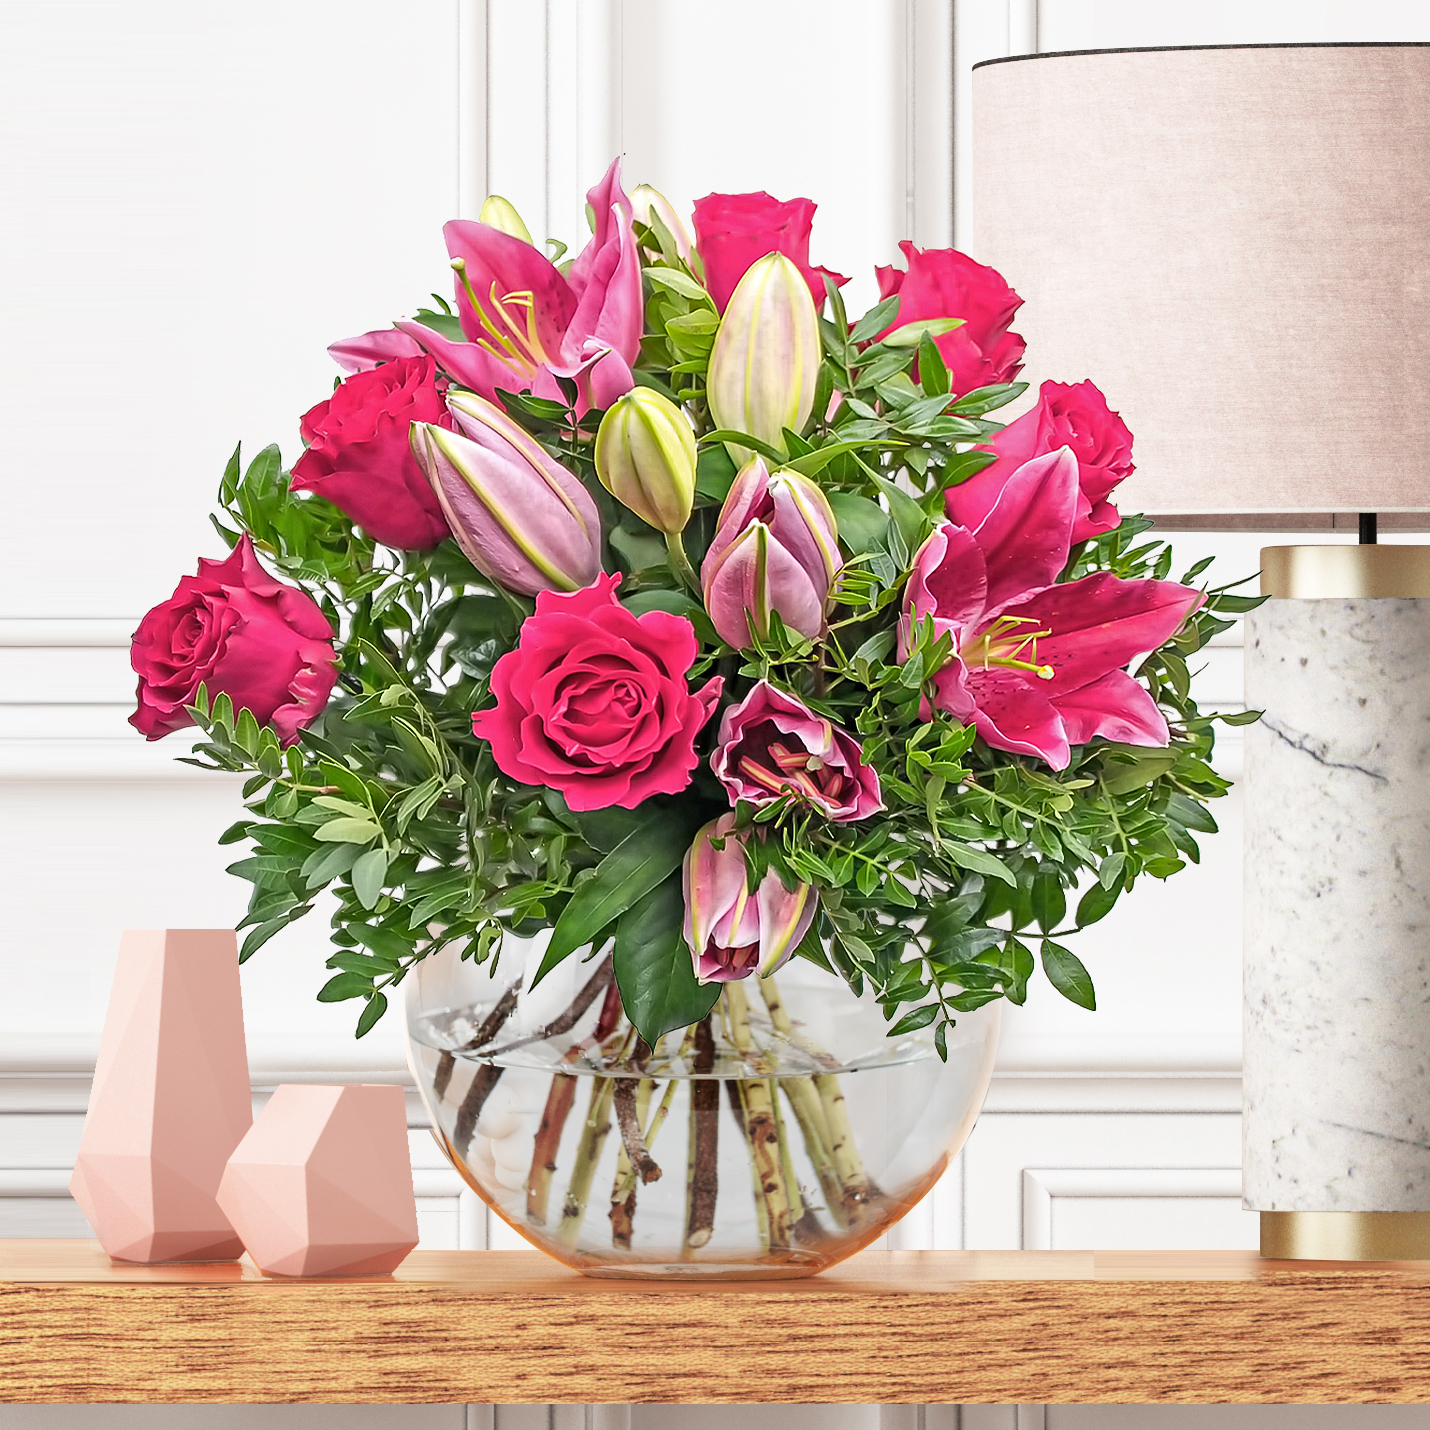 Flower Delivery | Send Luxury Flowers Online | FLOWERBX UK